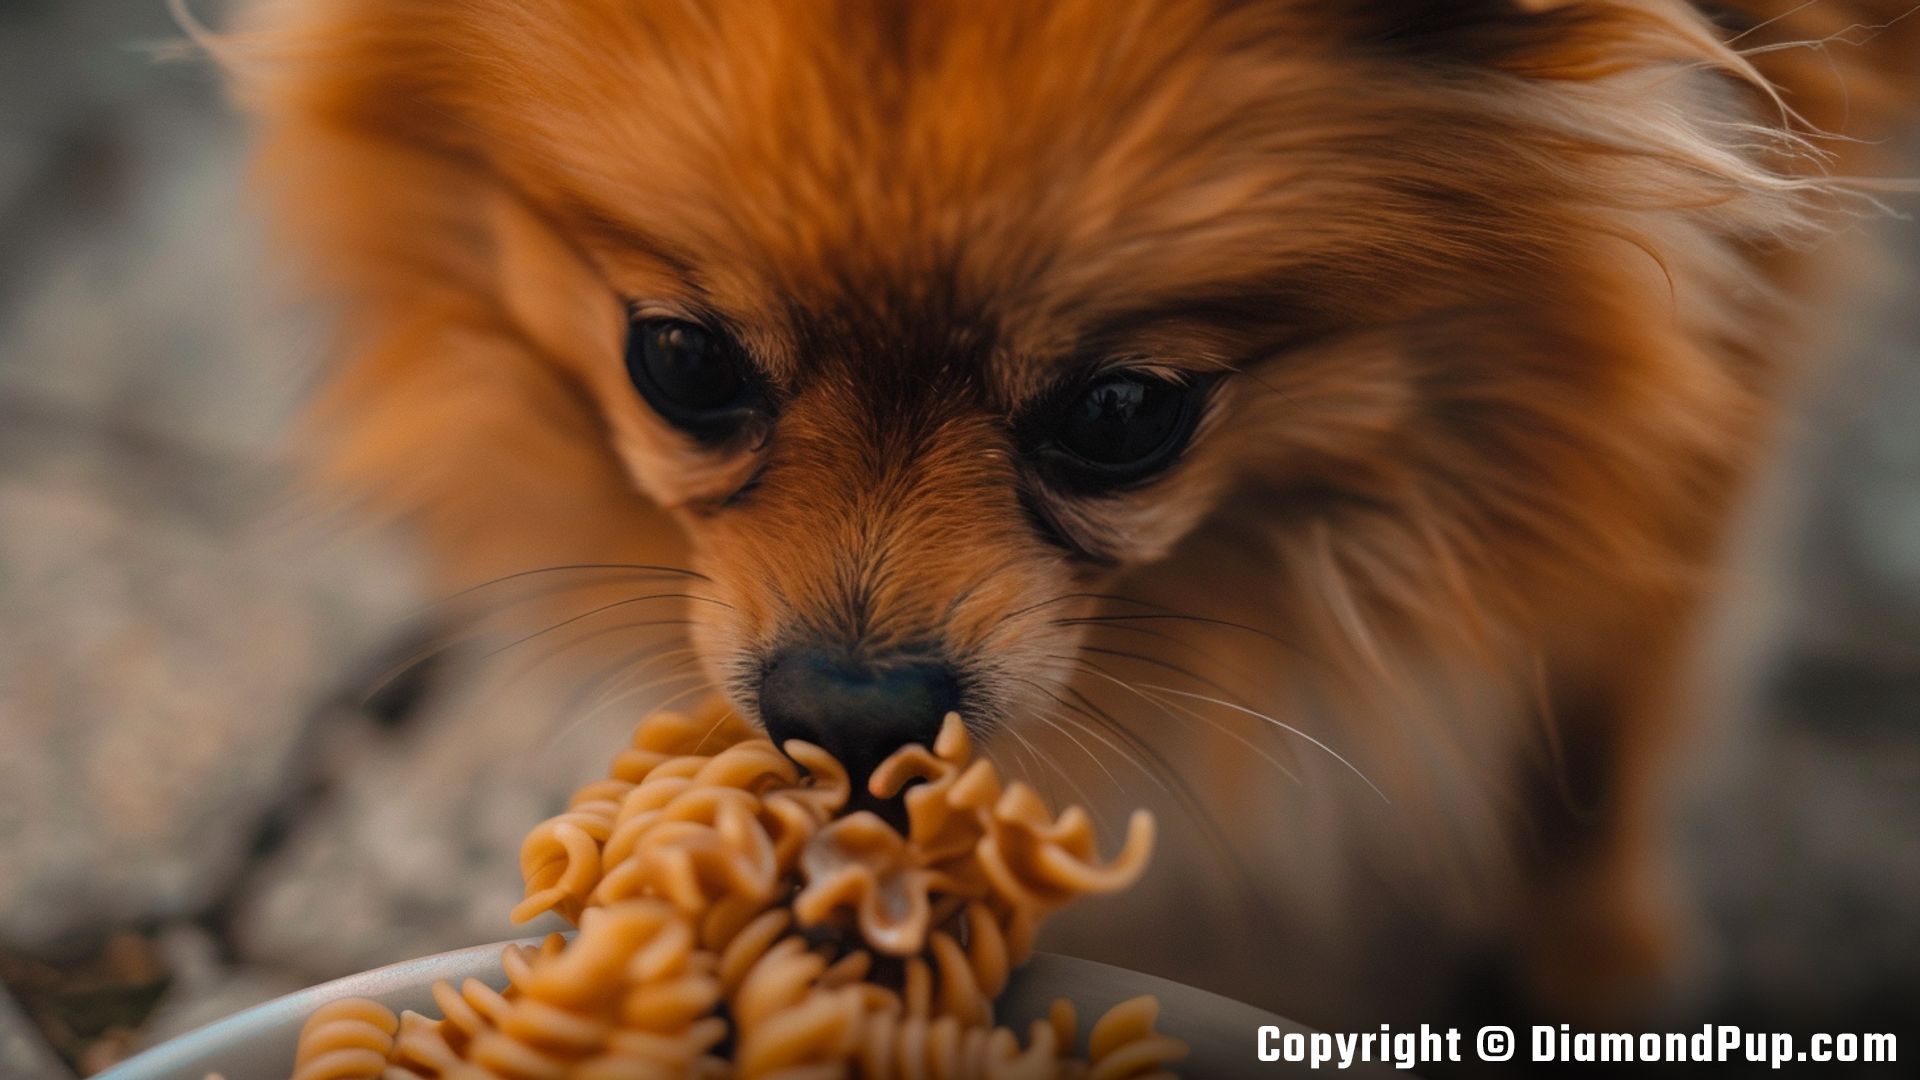 Photo of a Playful Pomeranian Eating Pasta